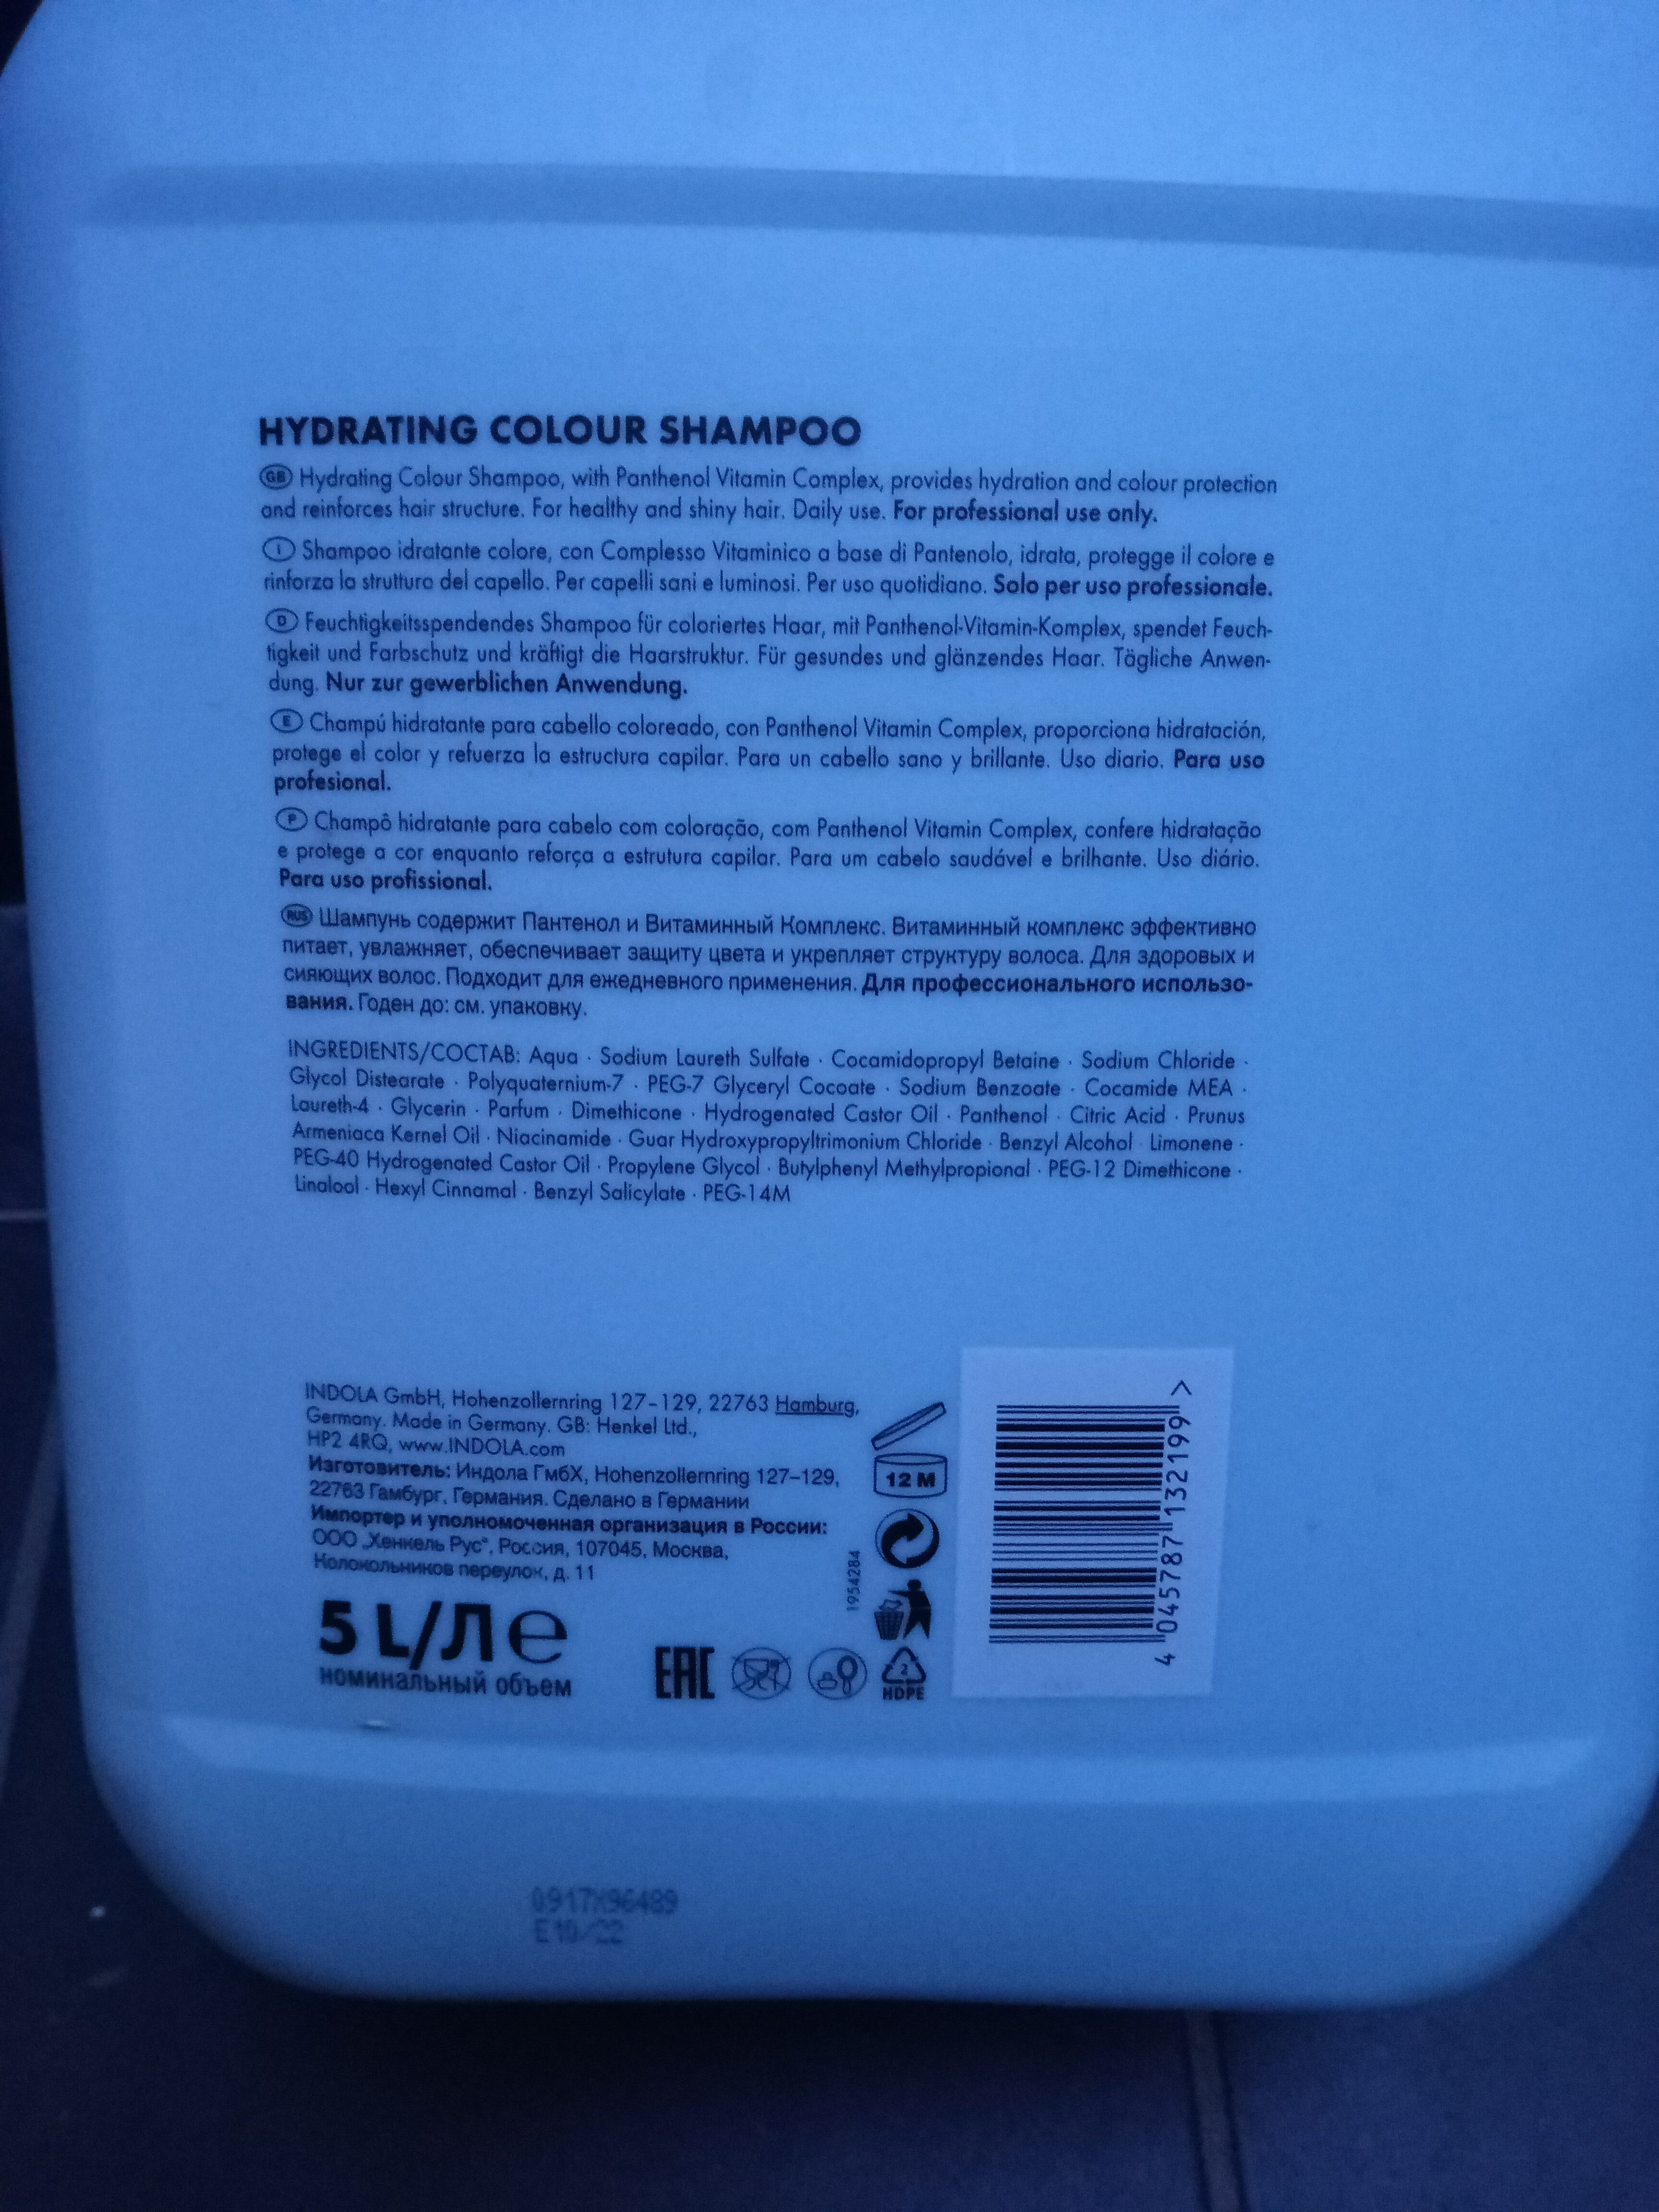 Hydrating Colour Shampoo - Ingredients - de